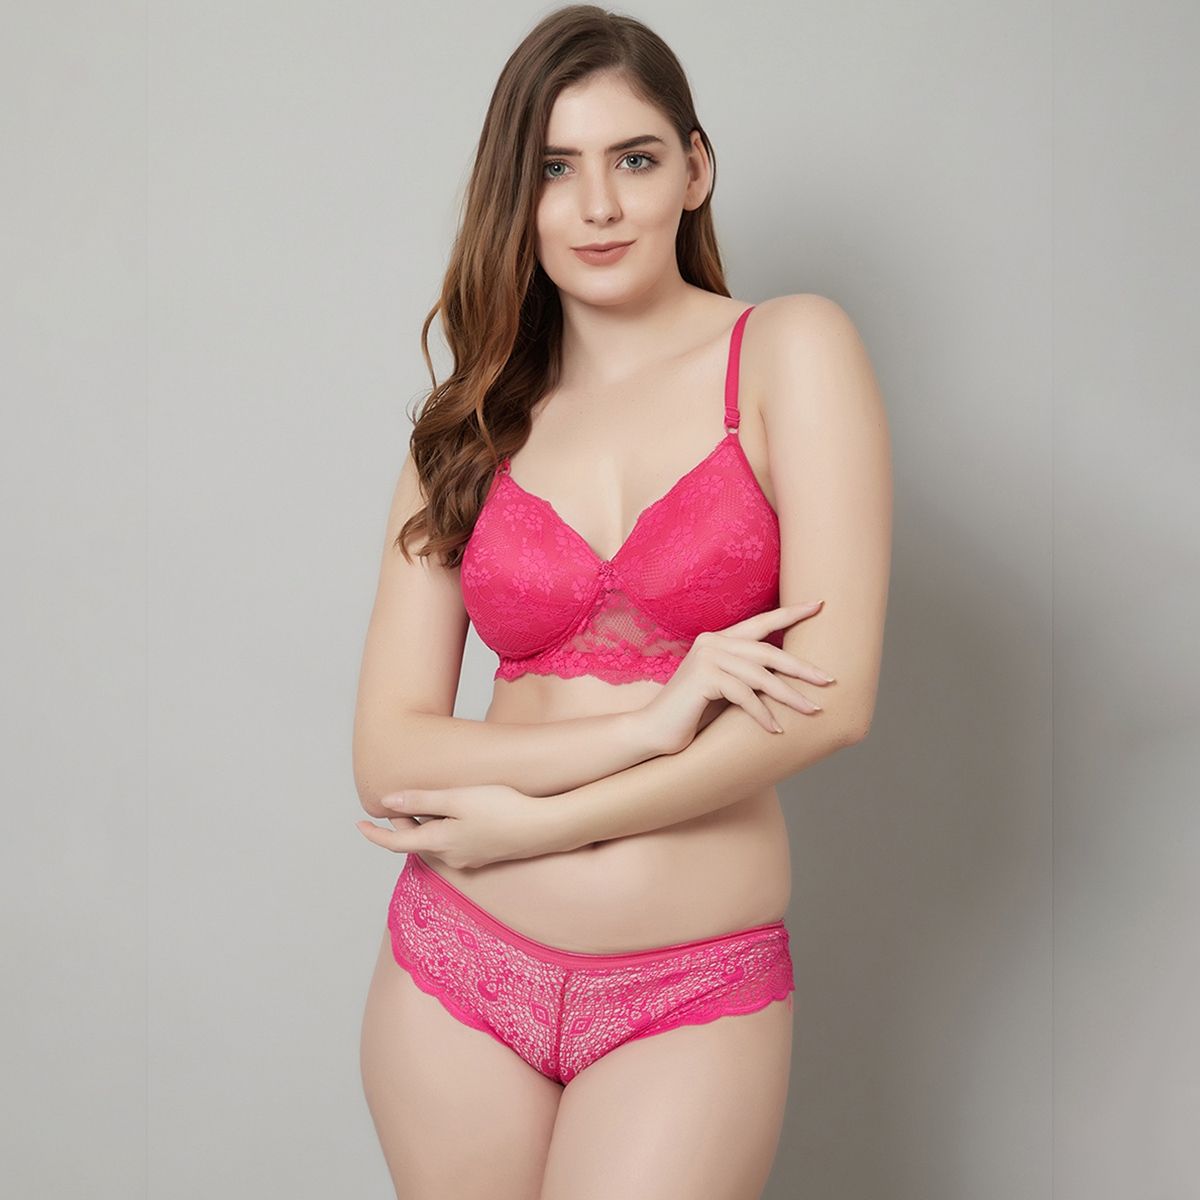 Buy PrettyCat Seethrough Bra Panty Lingerie Set Pink online